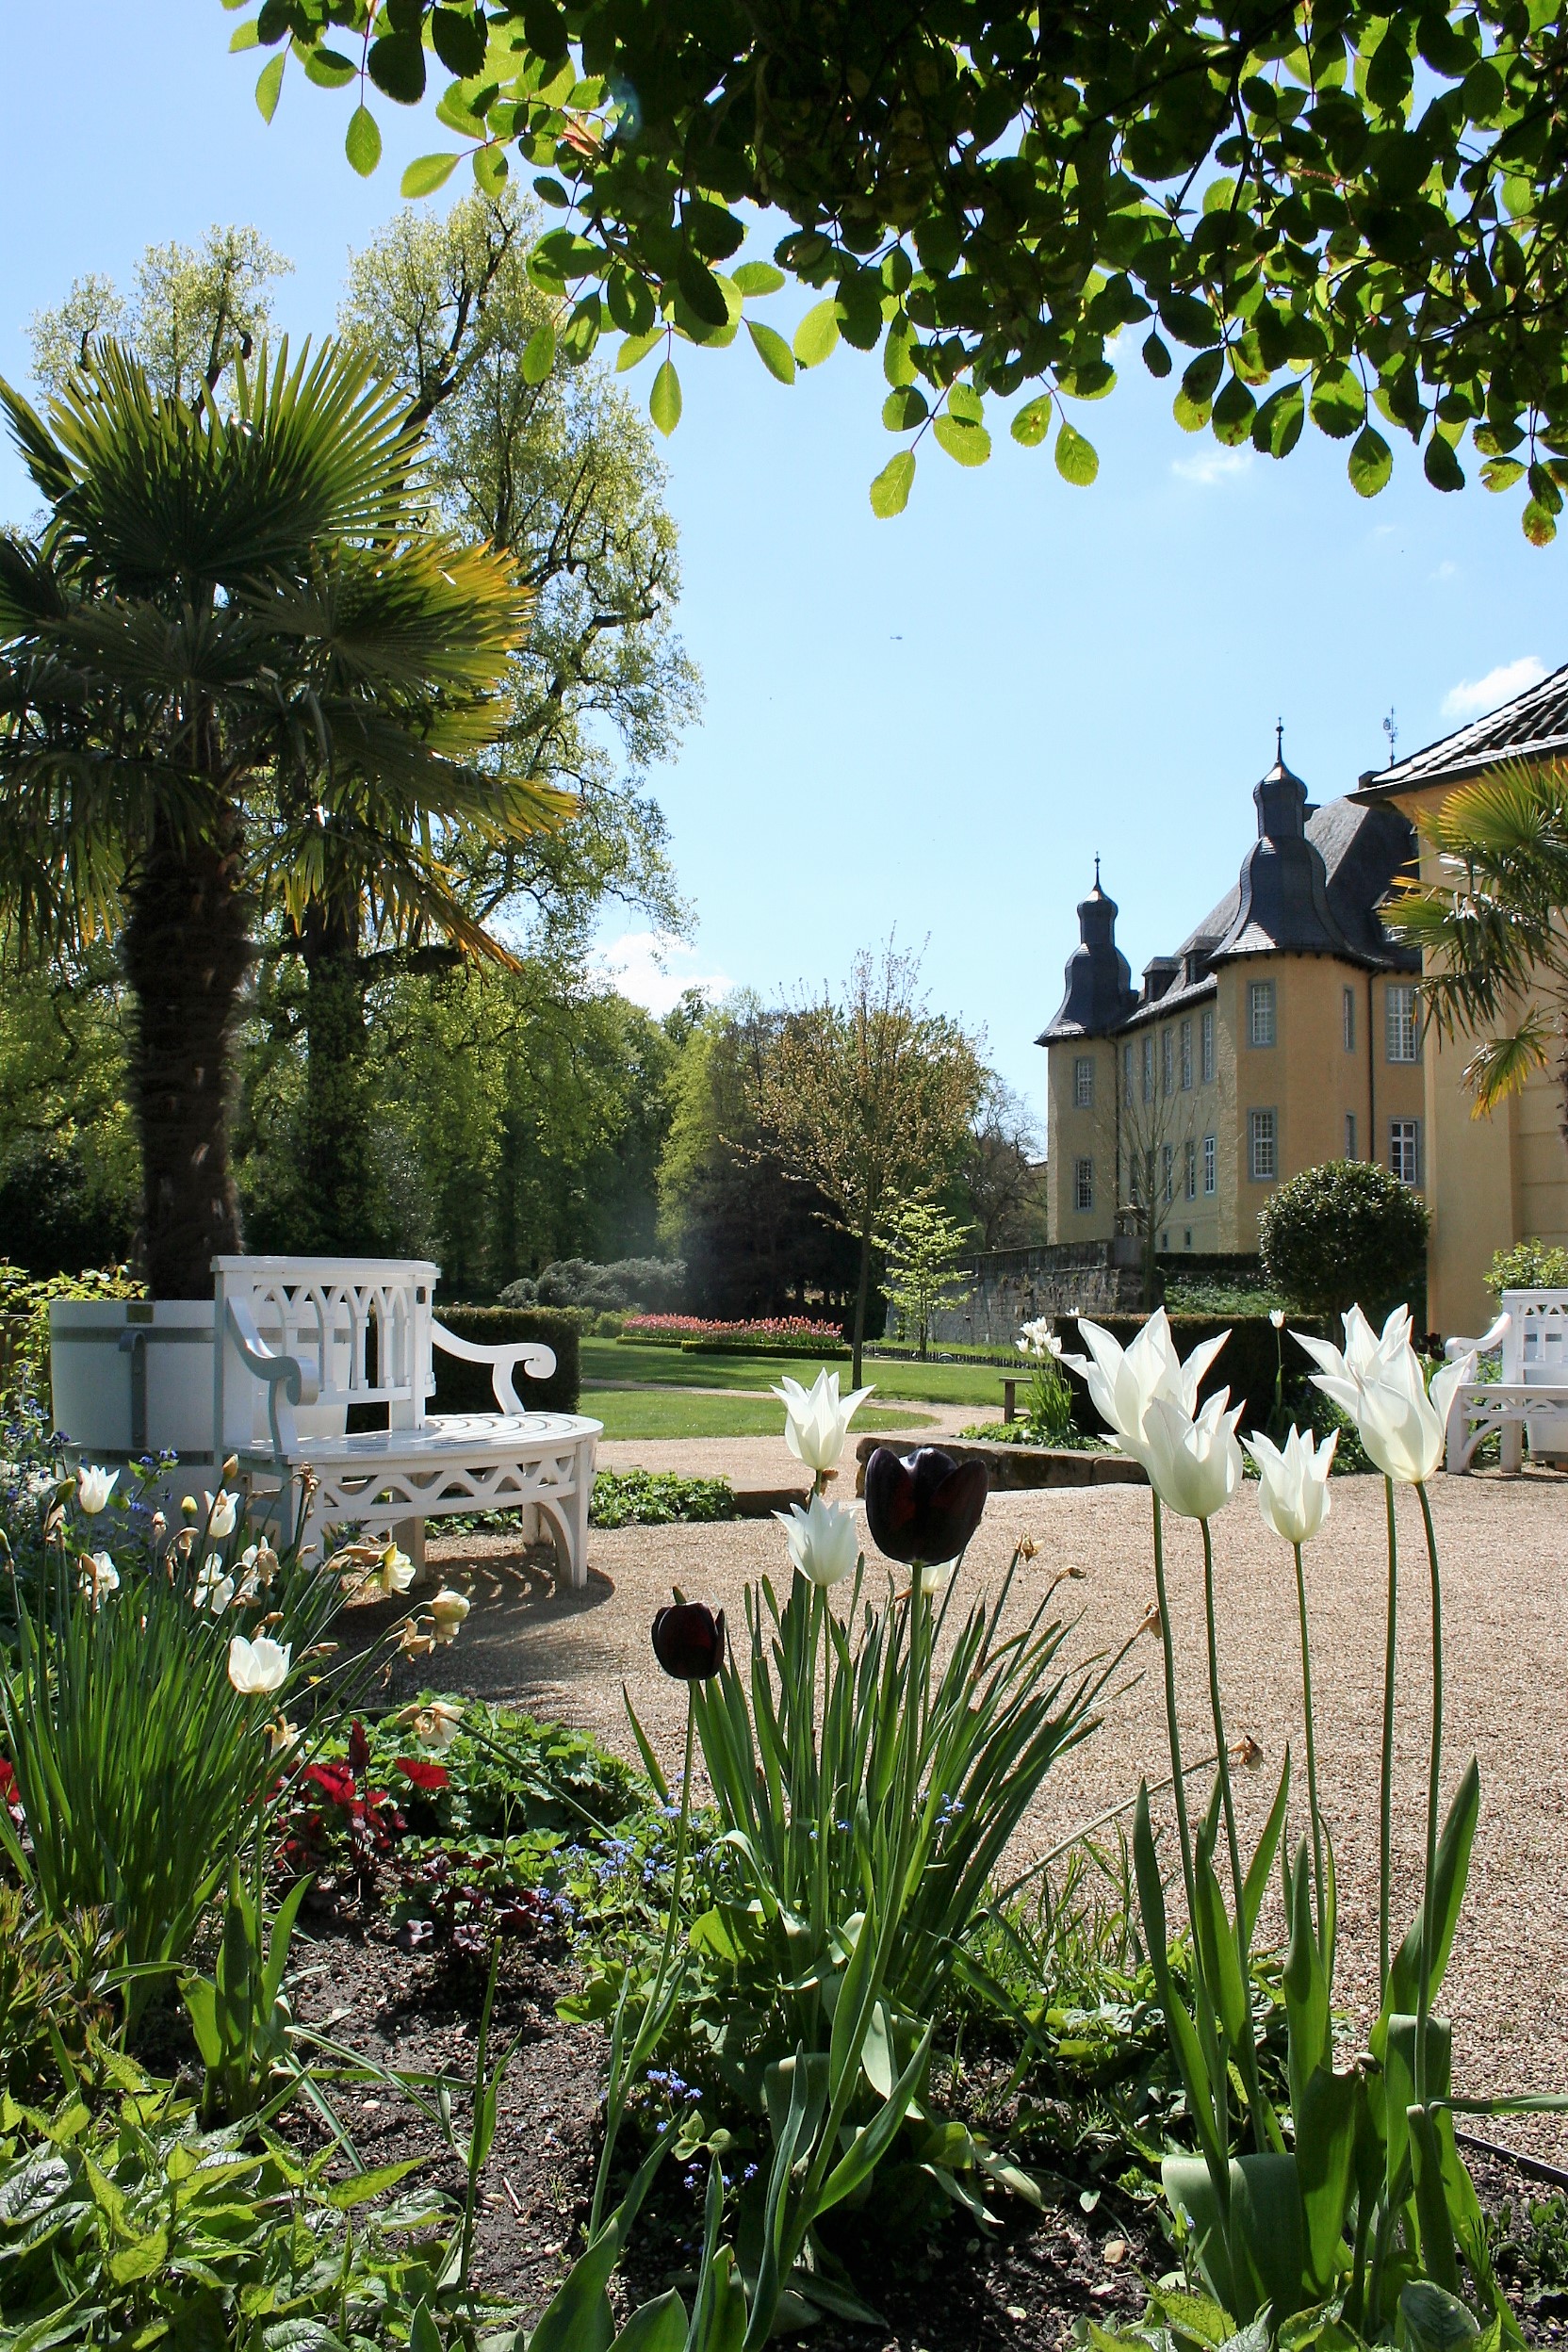 Blick vom Teehausgarten zum Schlossgarten, J. Spenjer